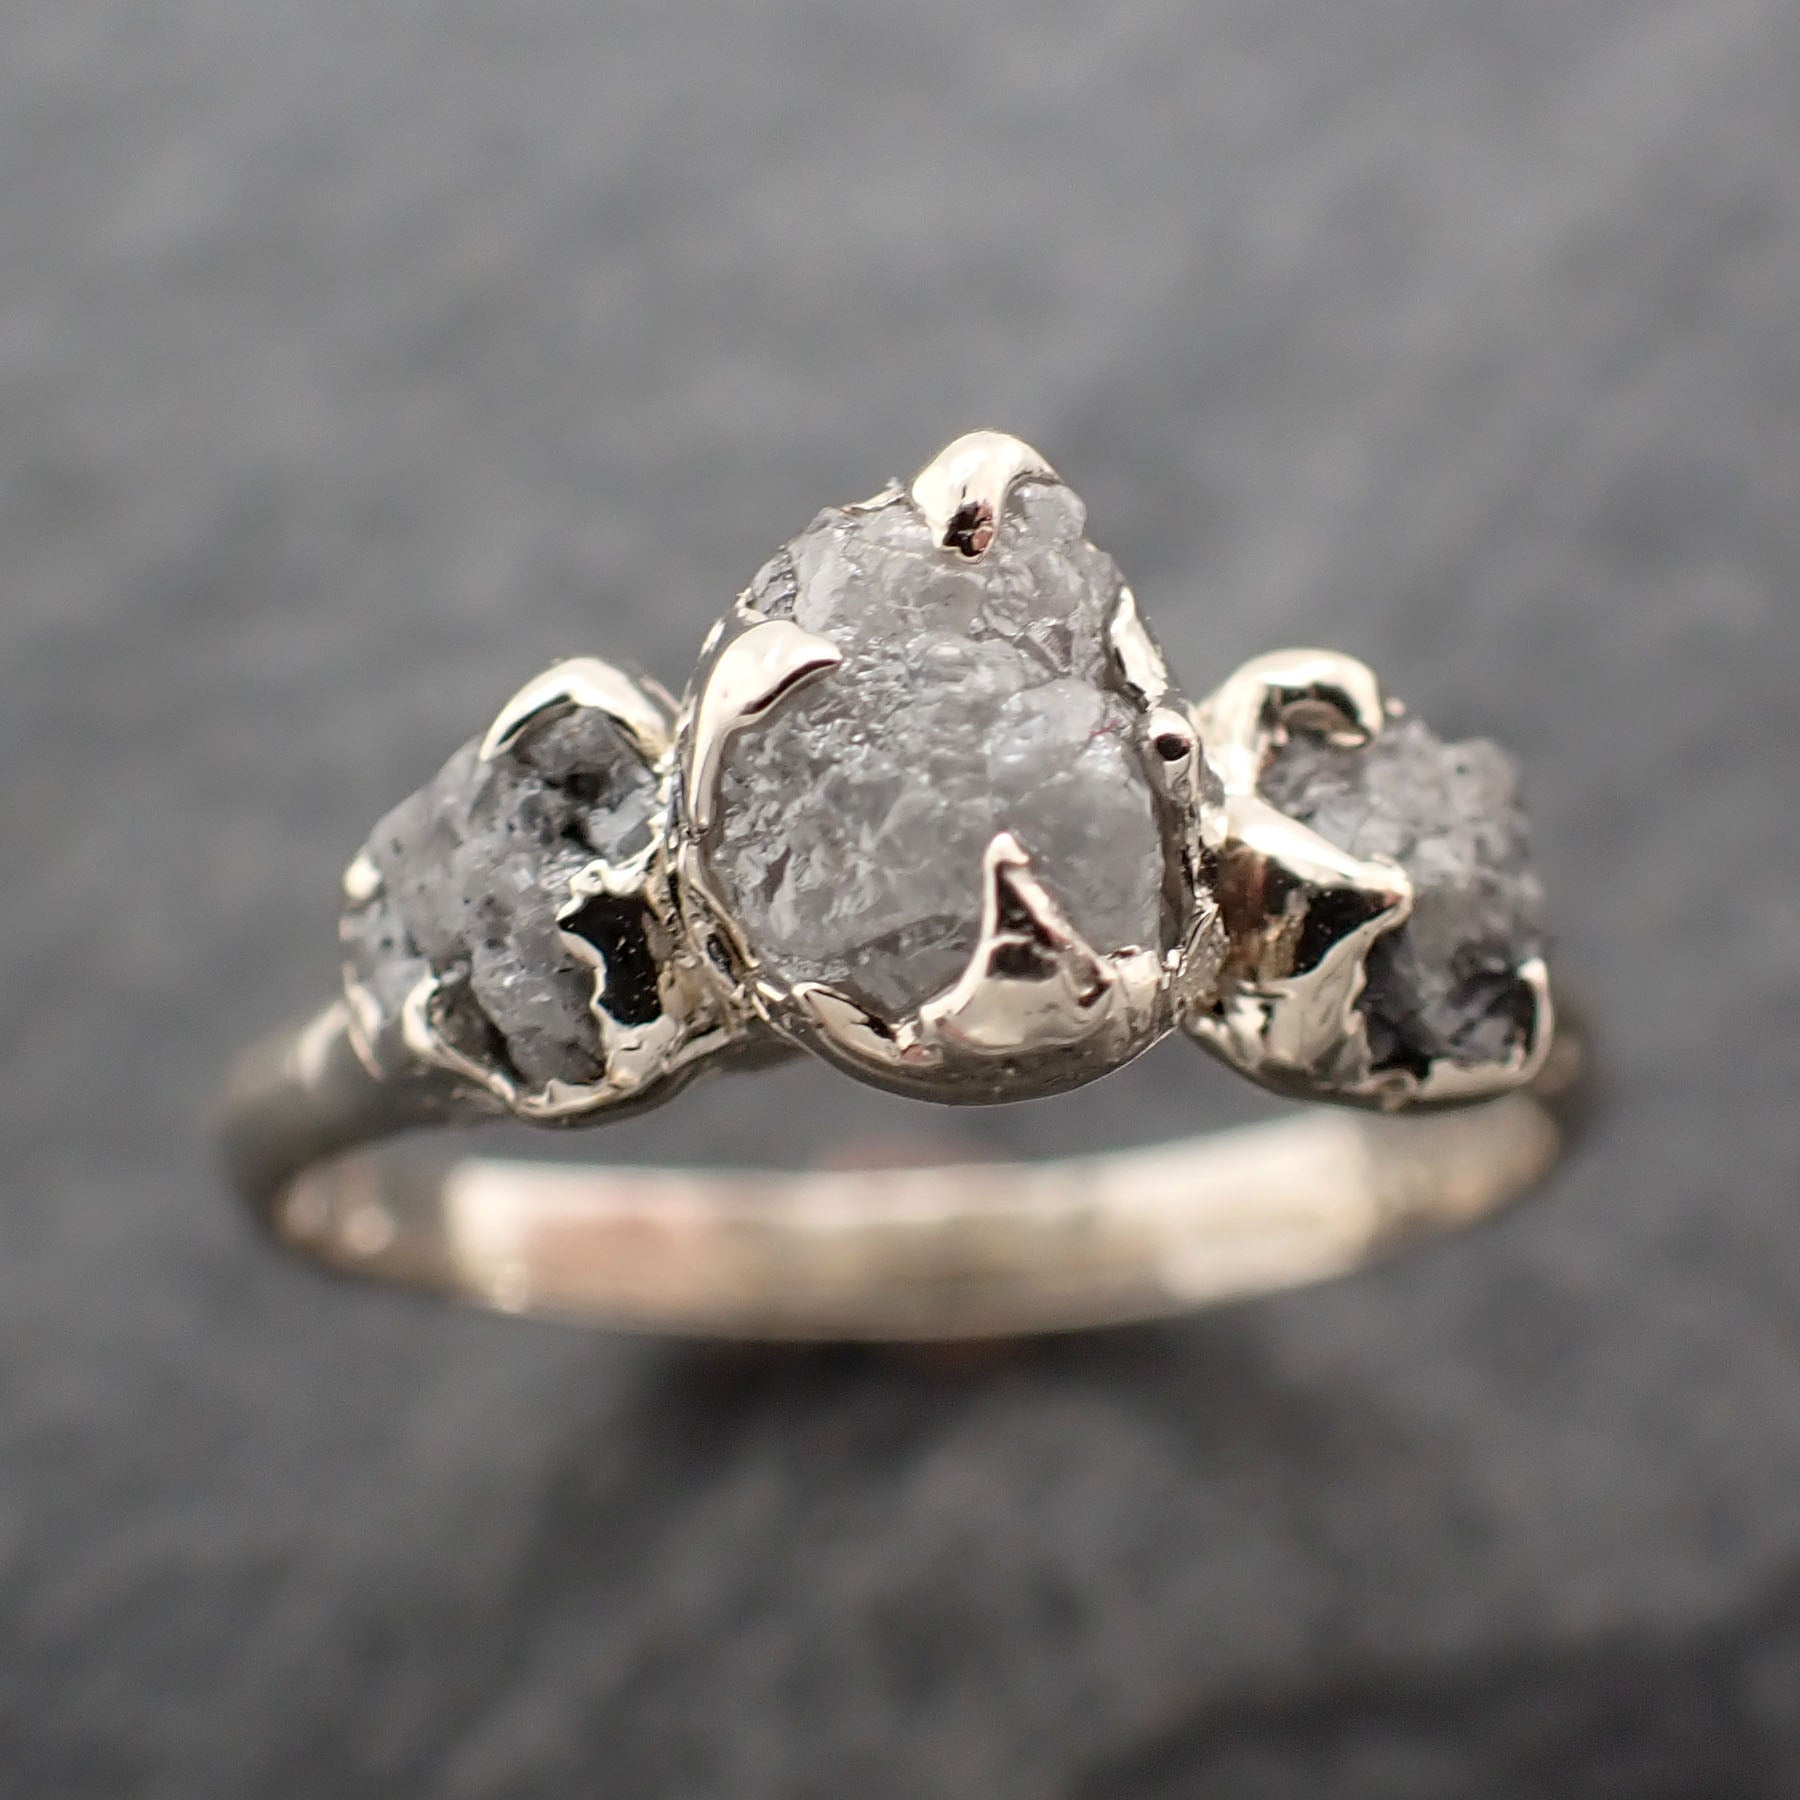 diamond white 14k gold engagement multi stone three ring rough gold wedding ring diamond wedding ring byangeline 2445 Alternative Engagement